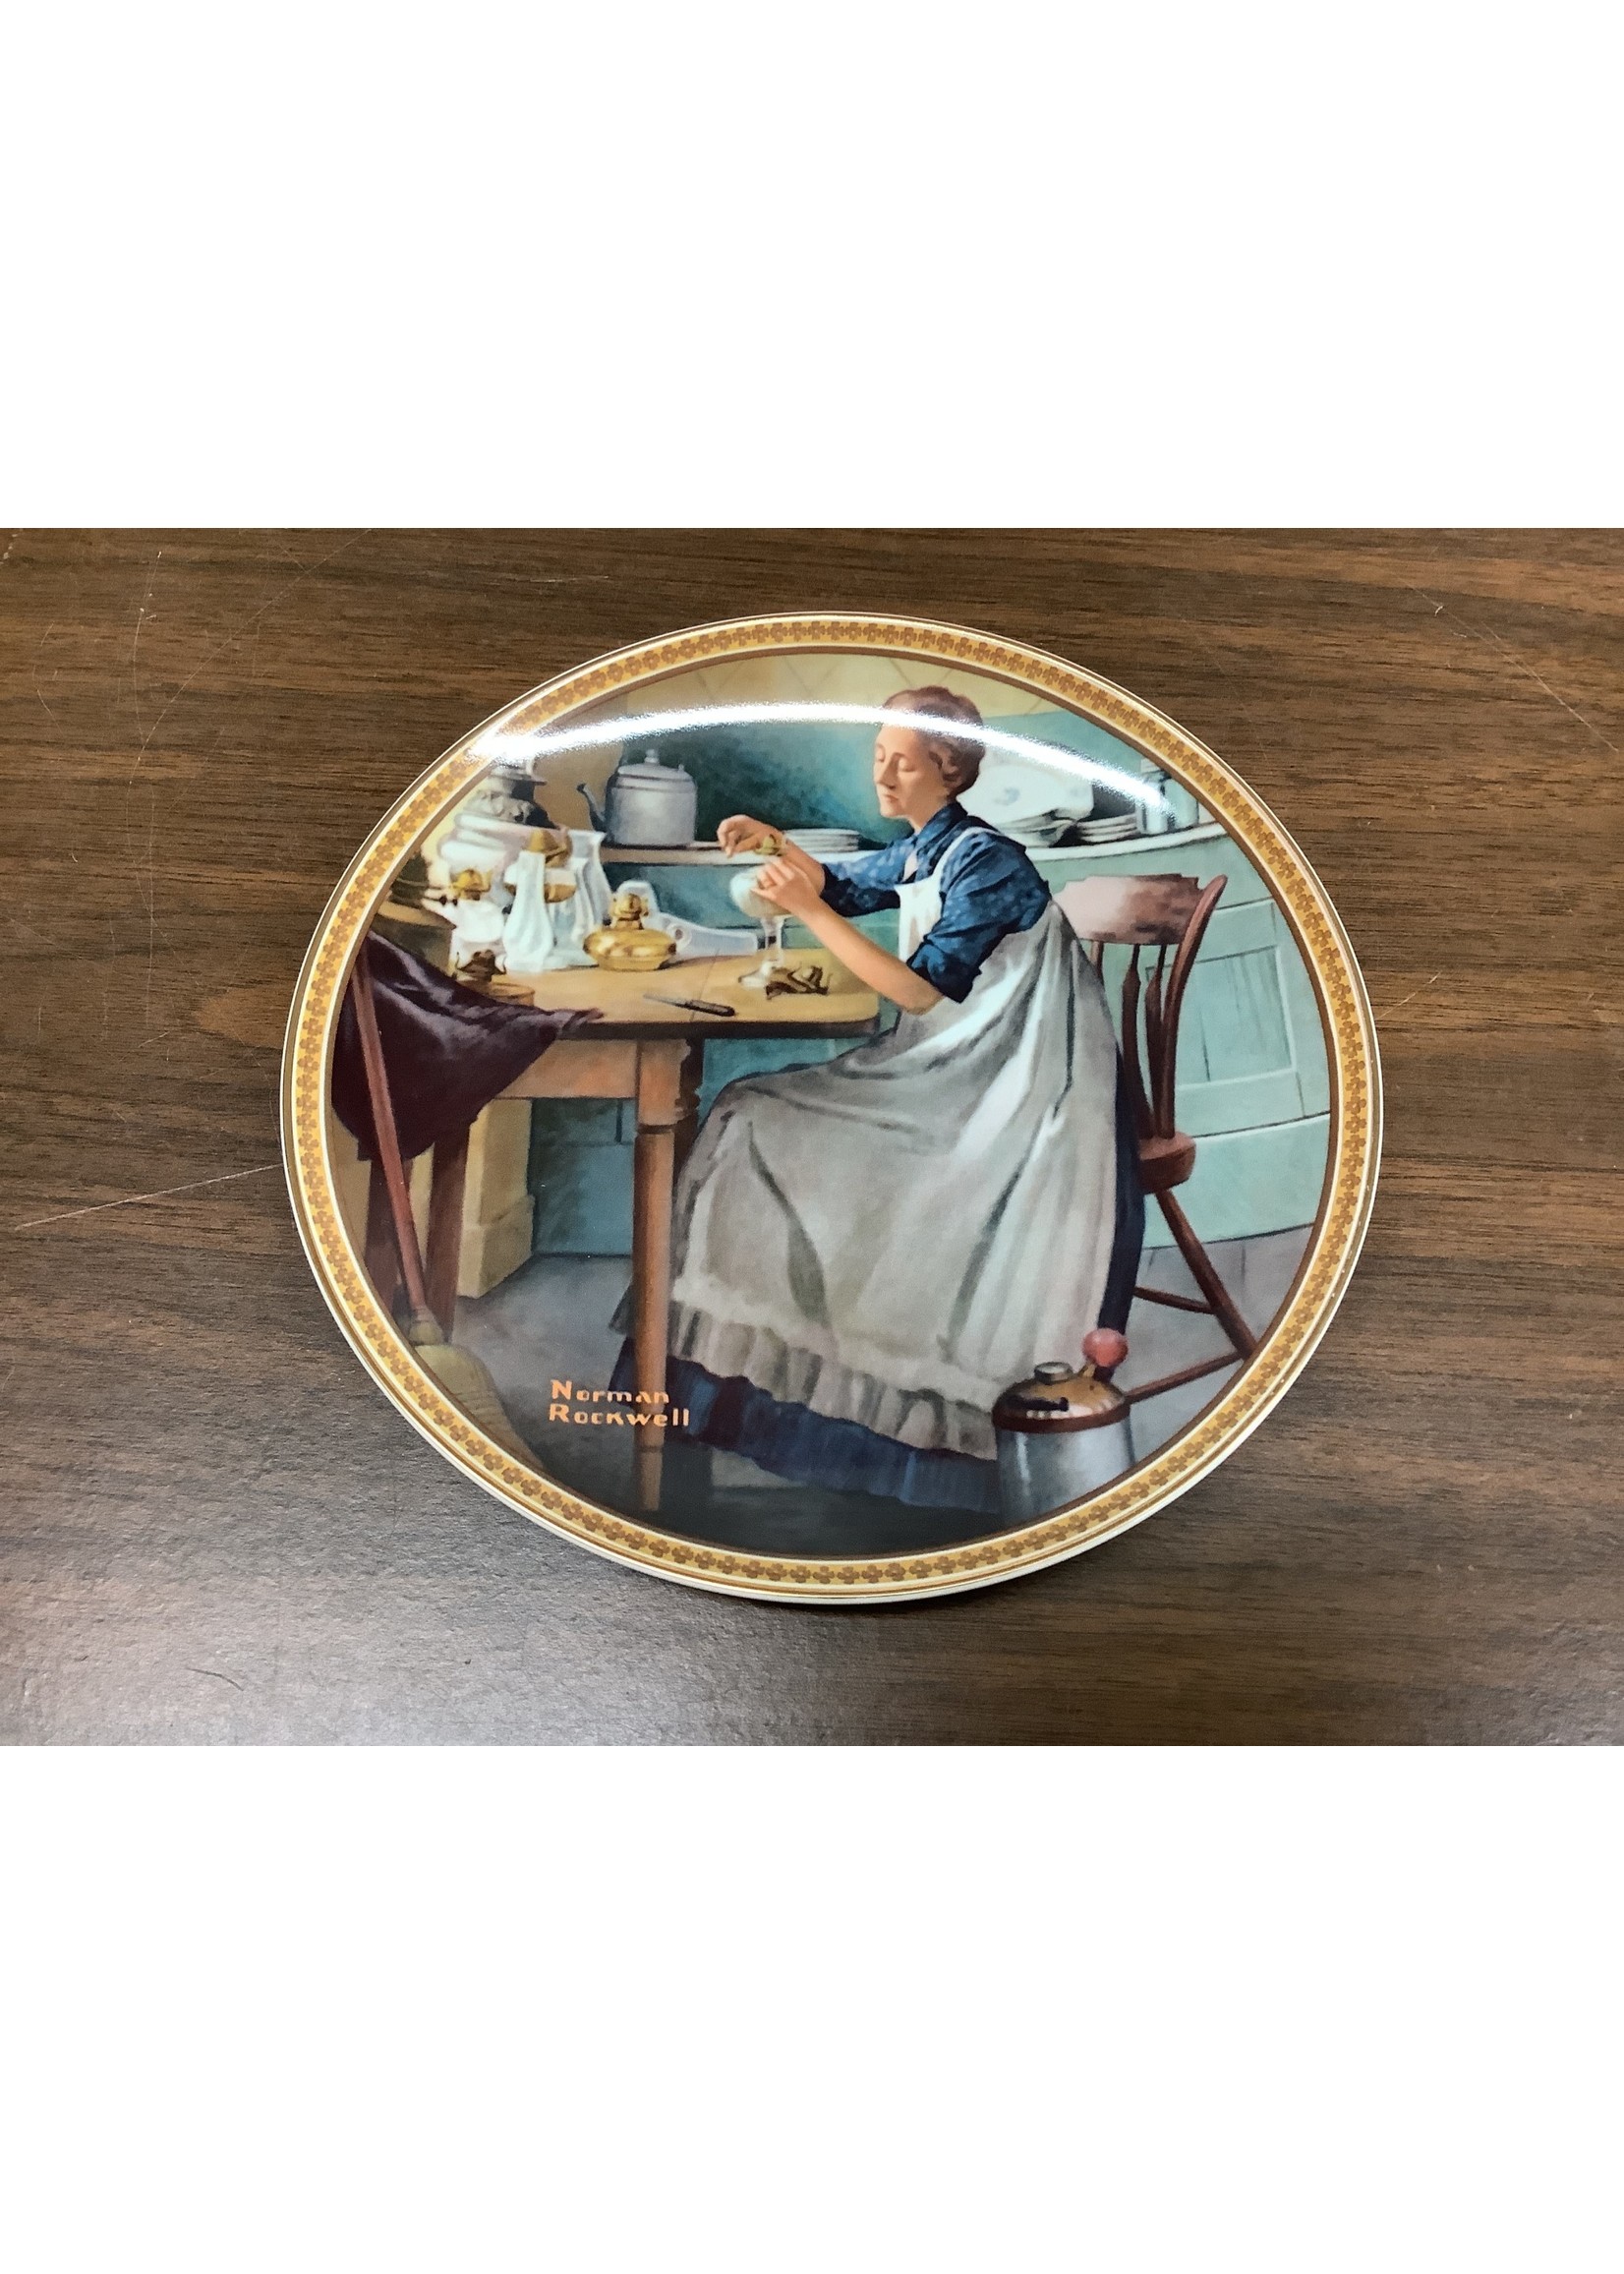 The Bradford Exchange Collectors Plate “Working in the Kitchen” Bradex-No. 84-R70-4.9